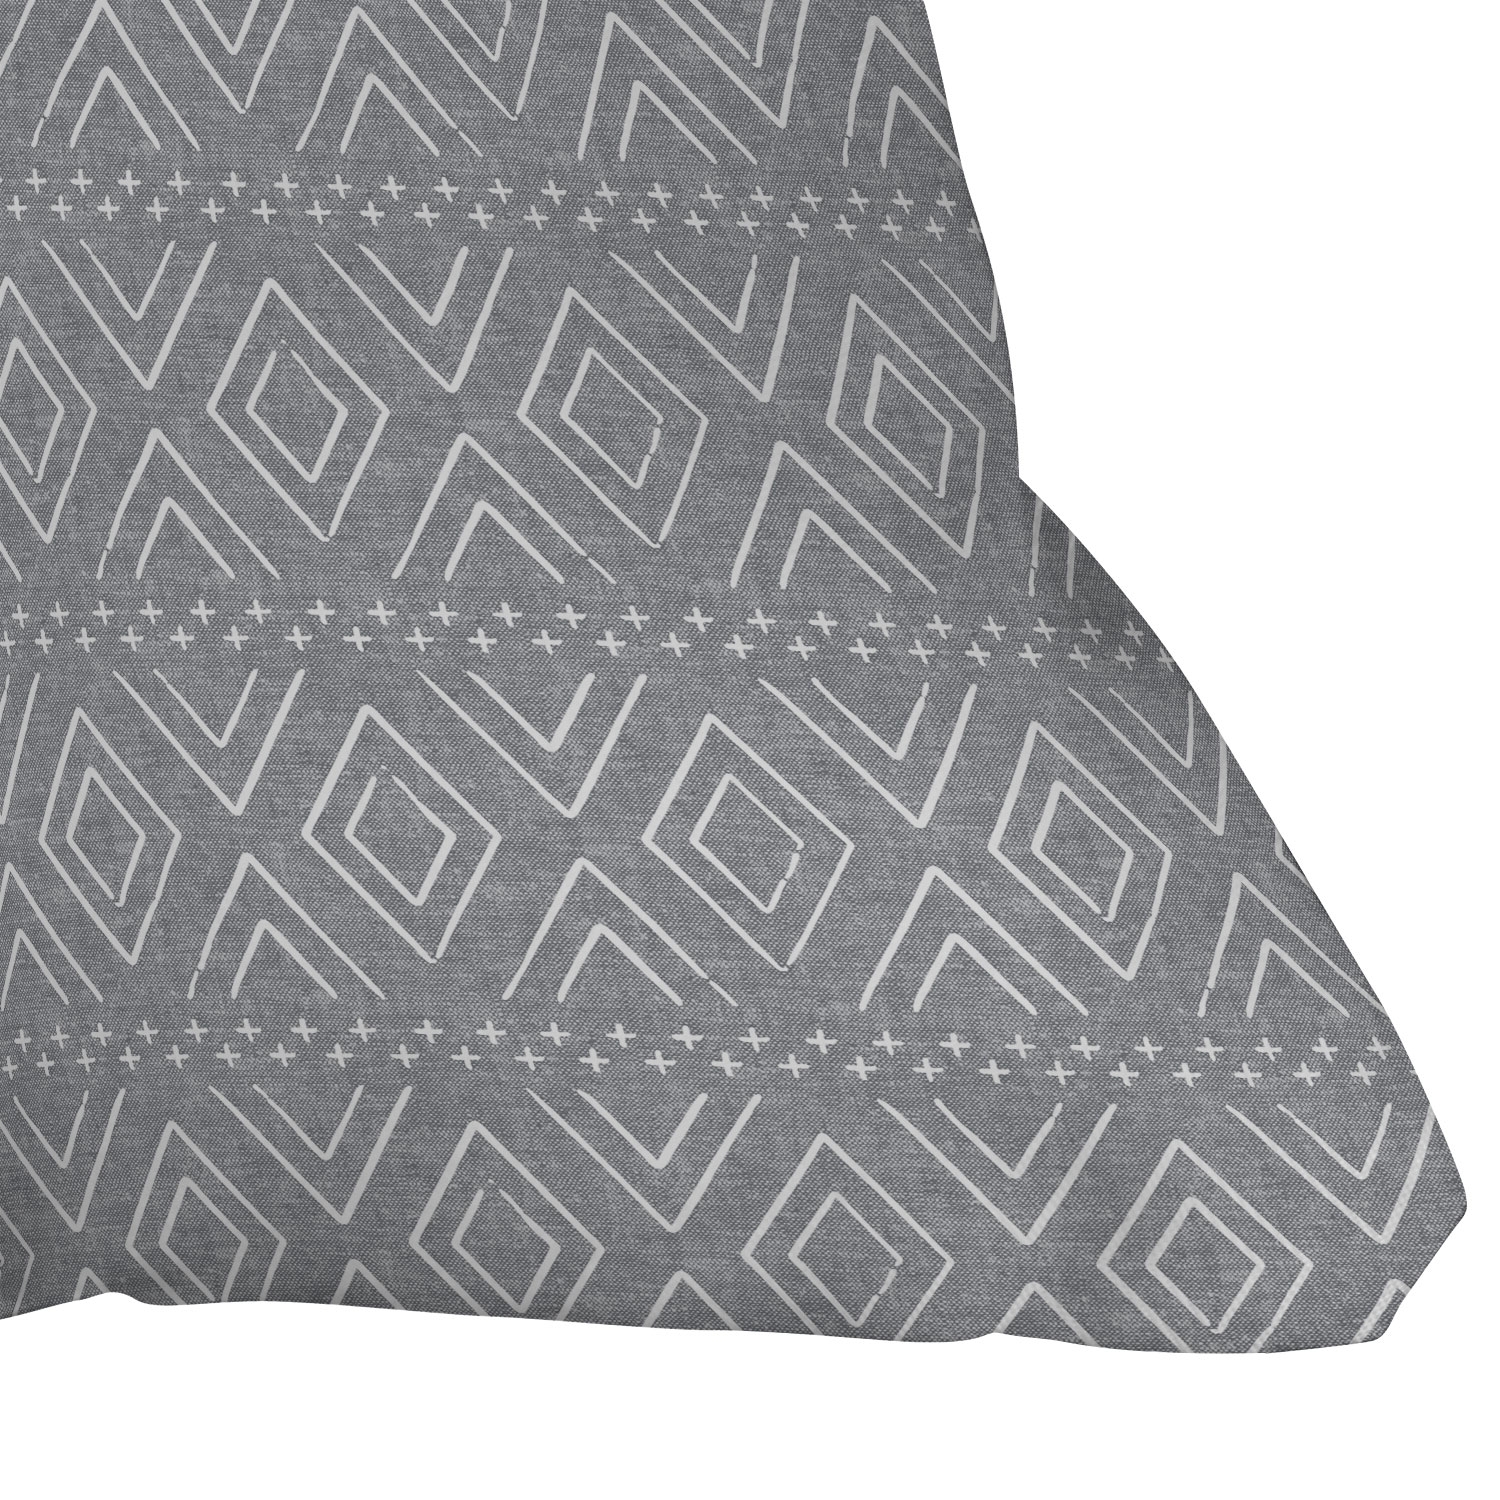 Farmhouse Diamonds Gray by Little Arrow Design Co - Outdoor Throw Pillow 18" x 18" - Image 2